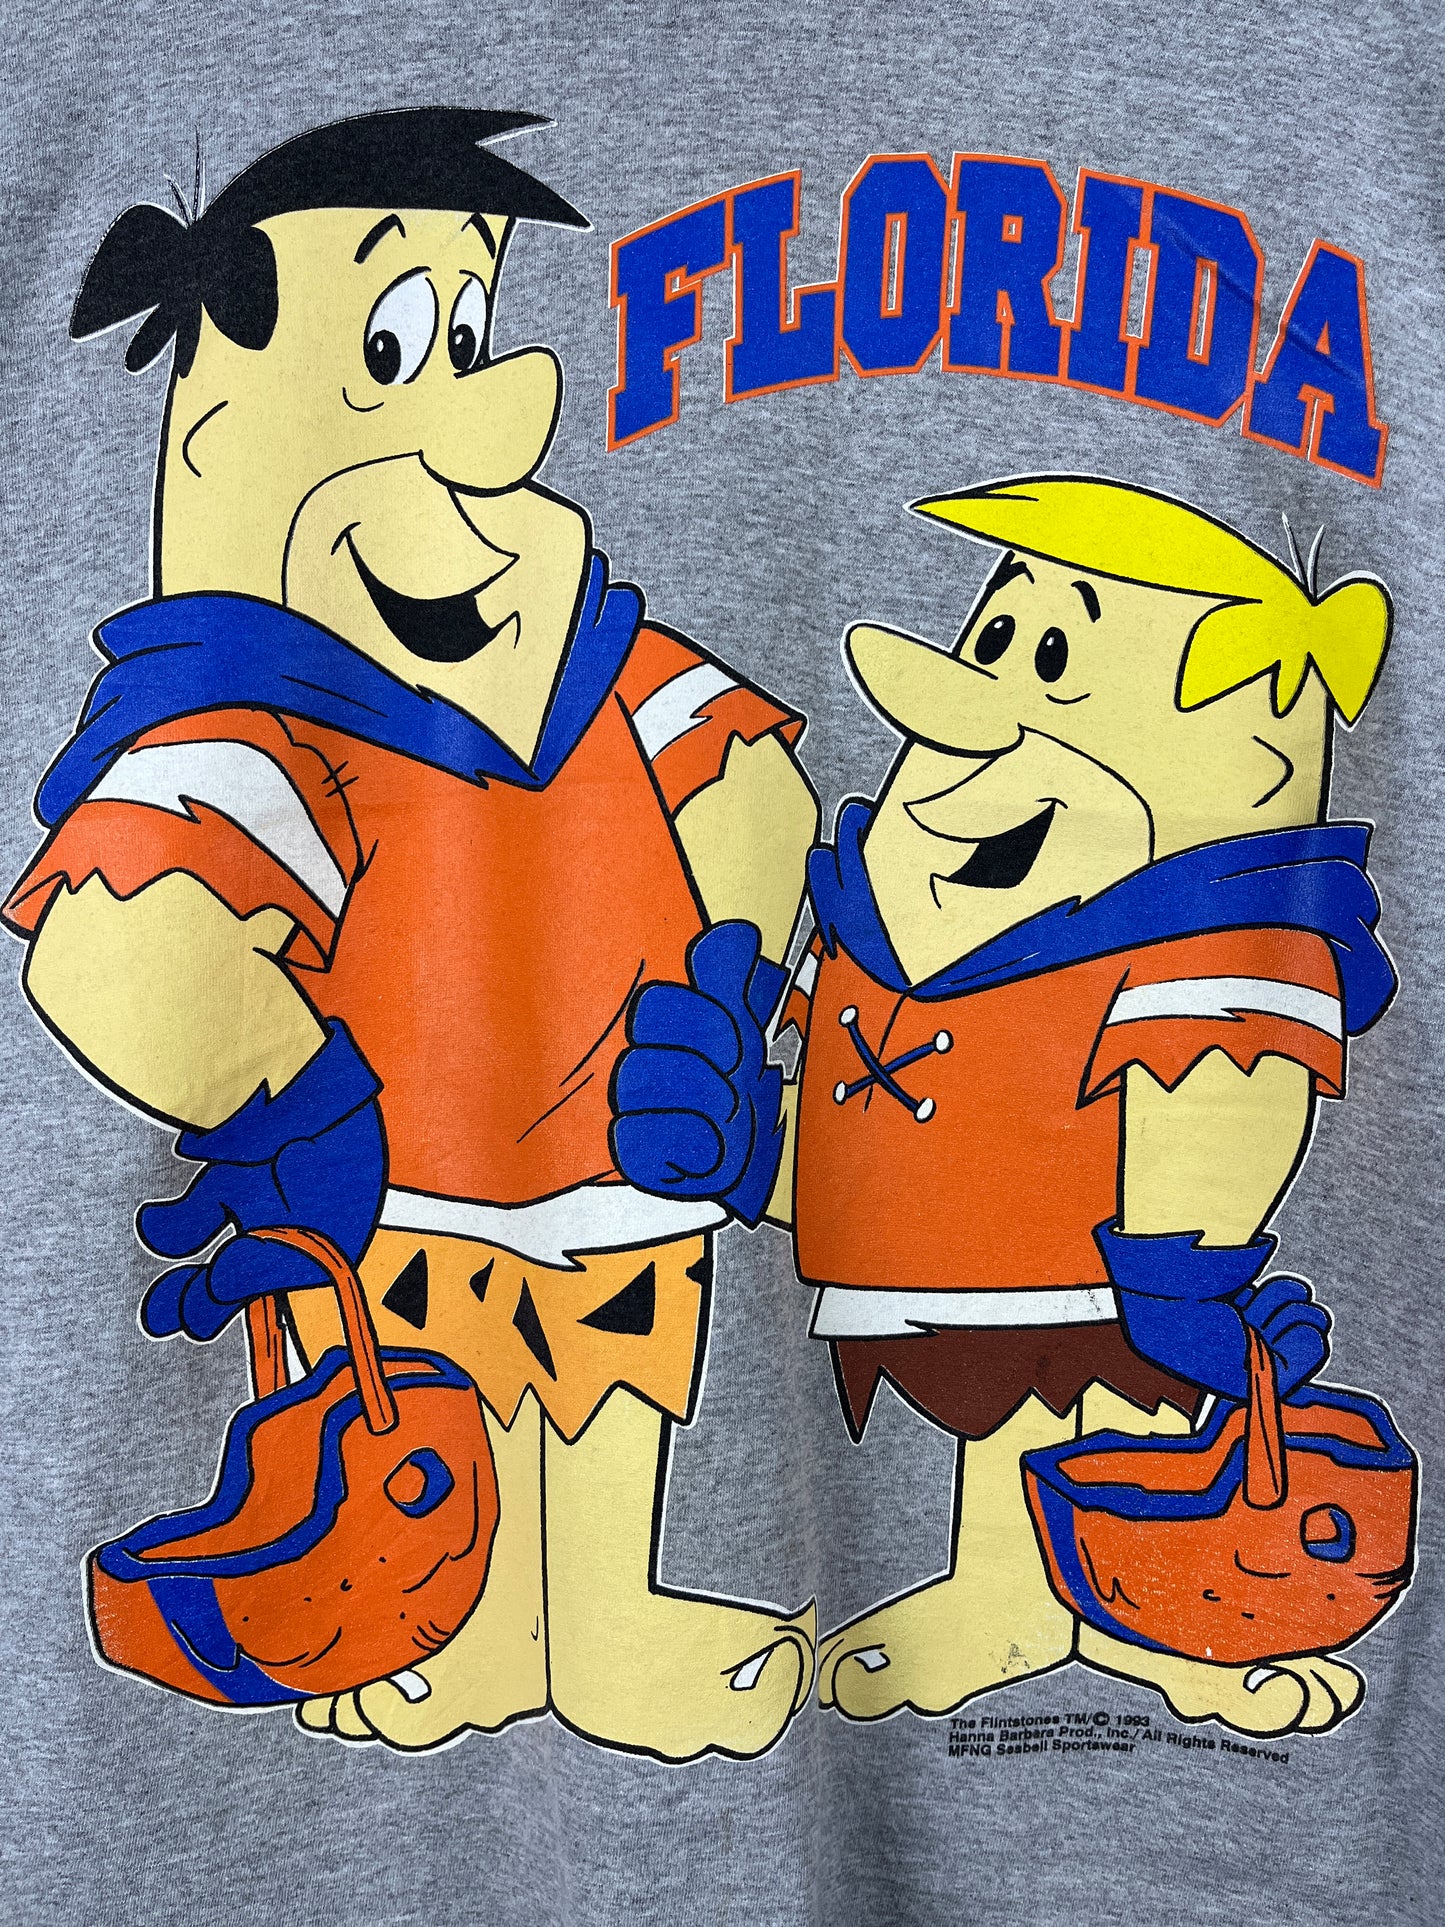 Vintage The Flintstones 1993 x Florida Gators NCAA team T-shirt